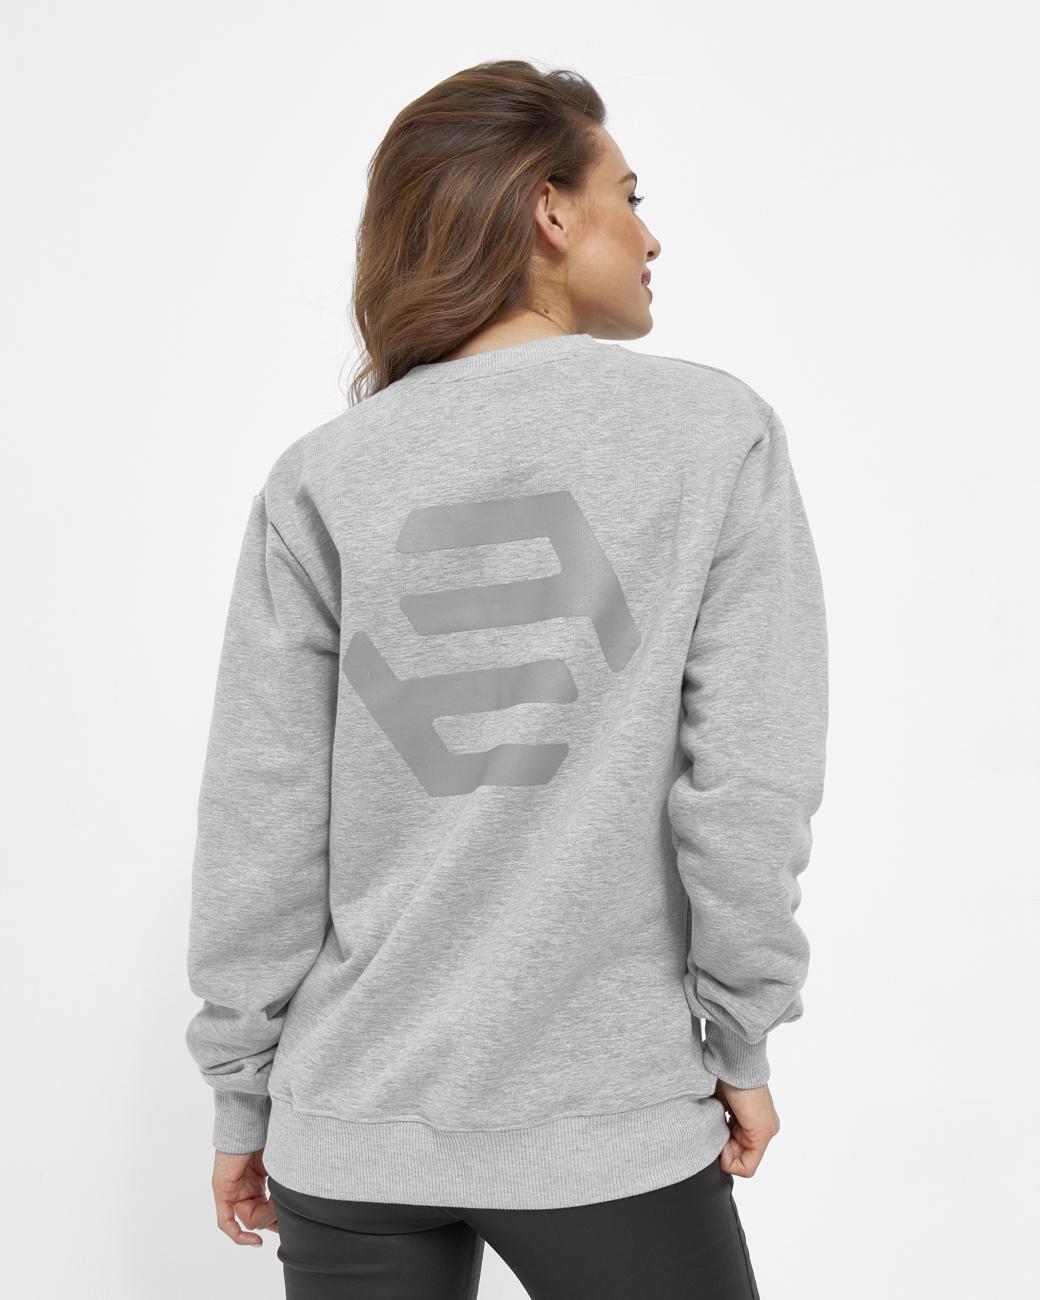 Sweatshirt SOFTFLIX grey S